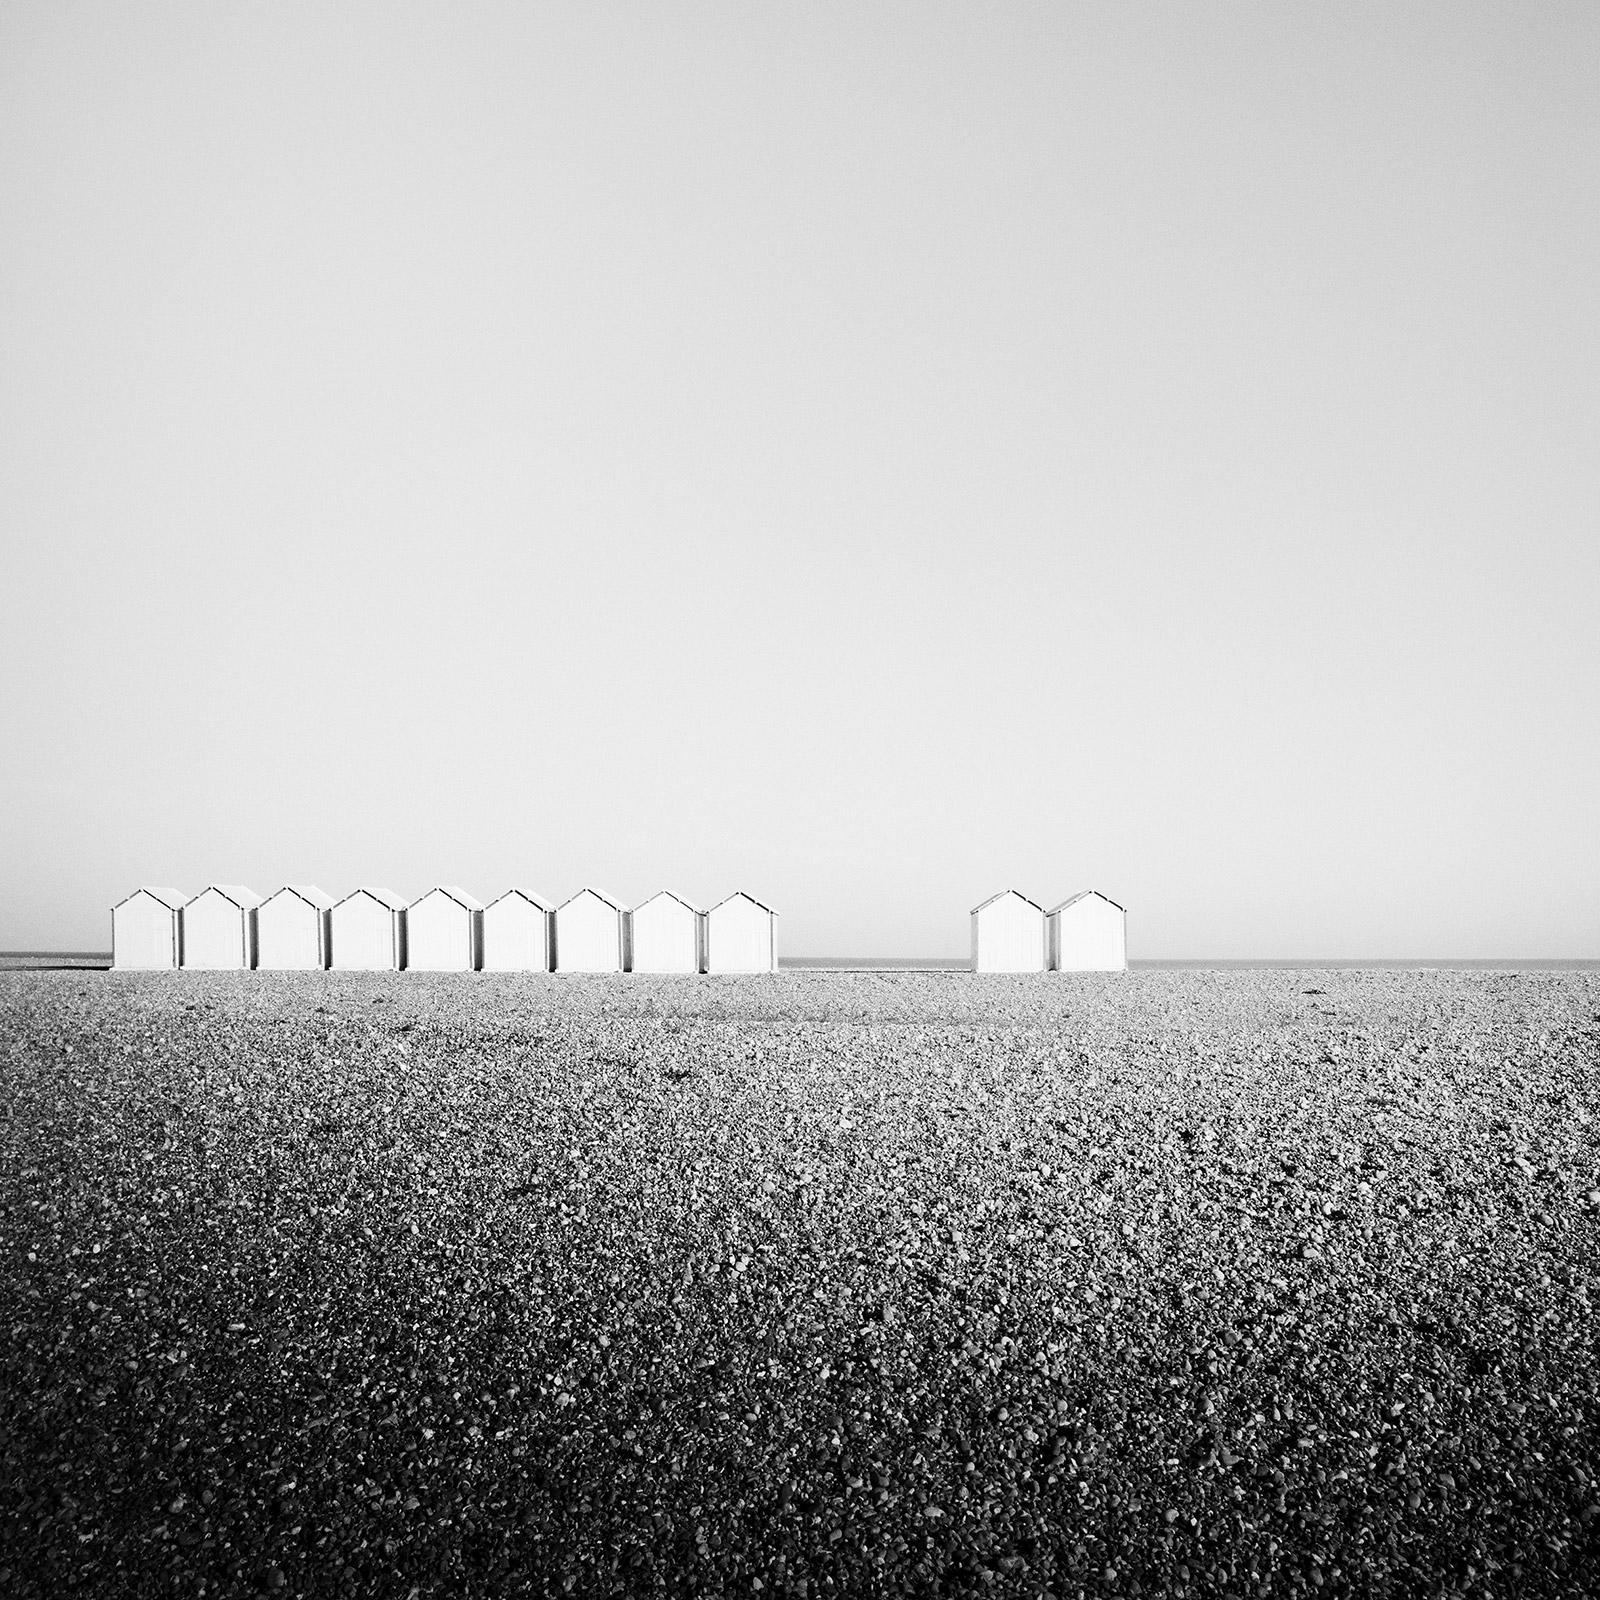 Eleven Huts, rocky beach, France, black and white fine art photography landscape